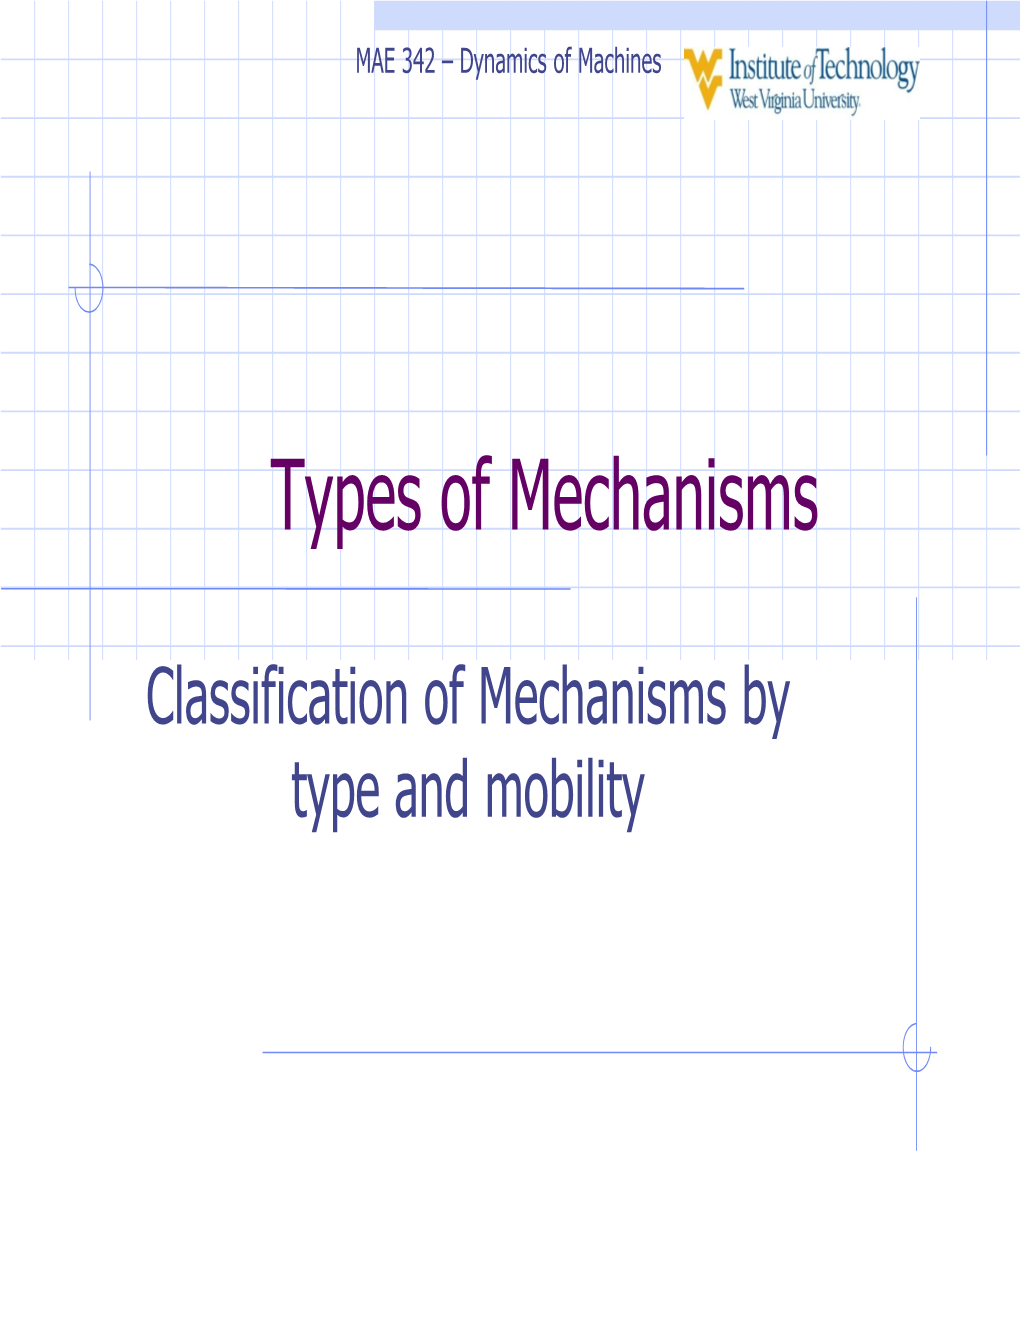 Types of Mechanisms